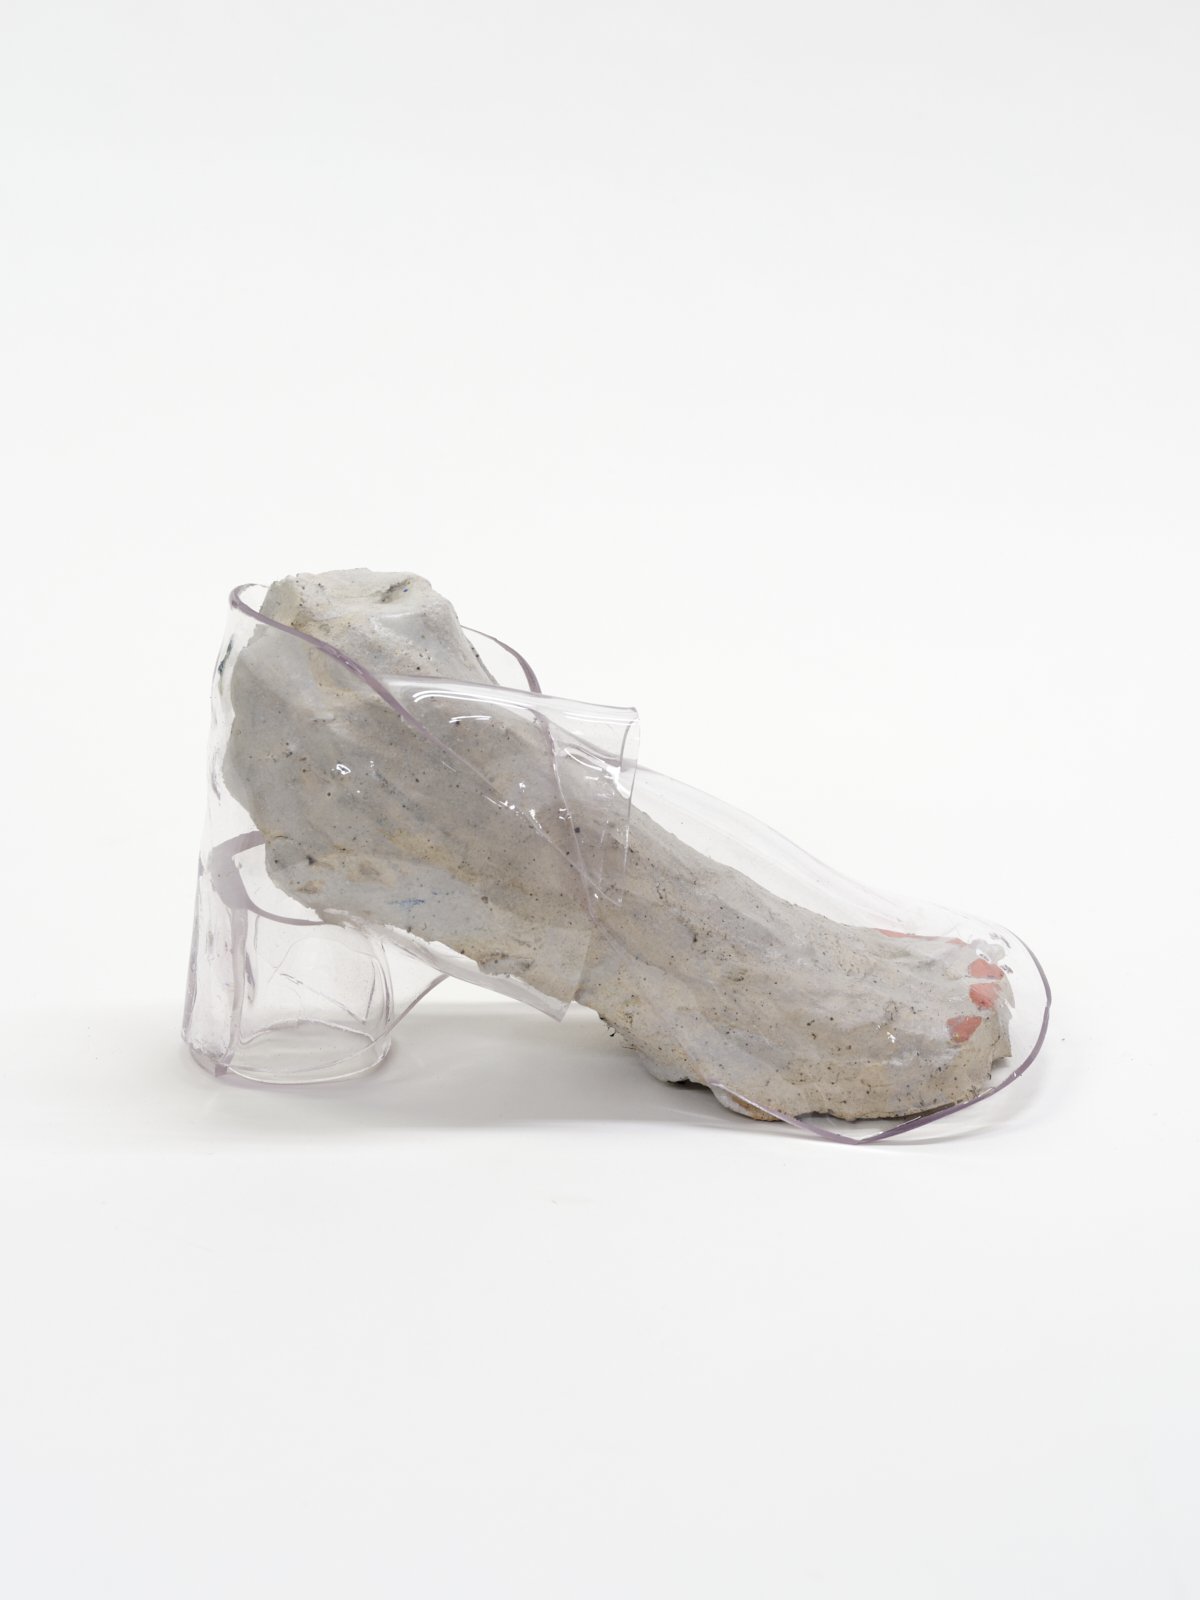  Becky Kolsrud   Slipper , 2020-2023  ceramic and plastic  6h x 8w x 5d in  15.24h x 20.32w x 12.70d cm   